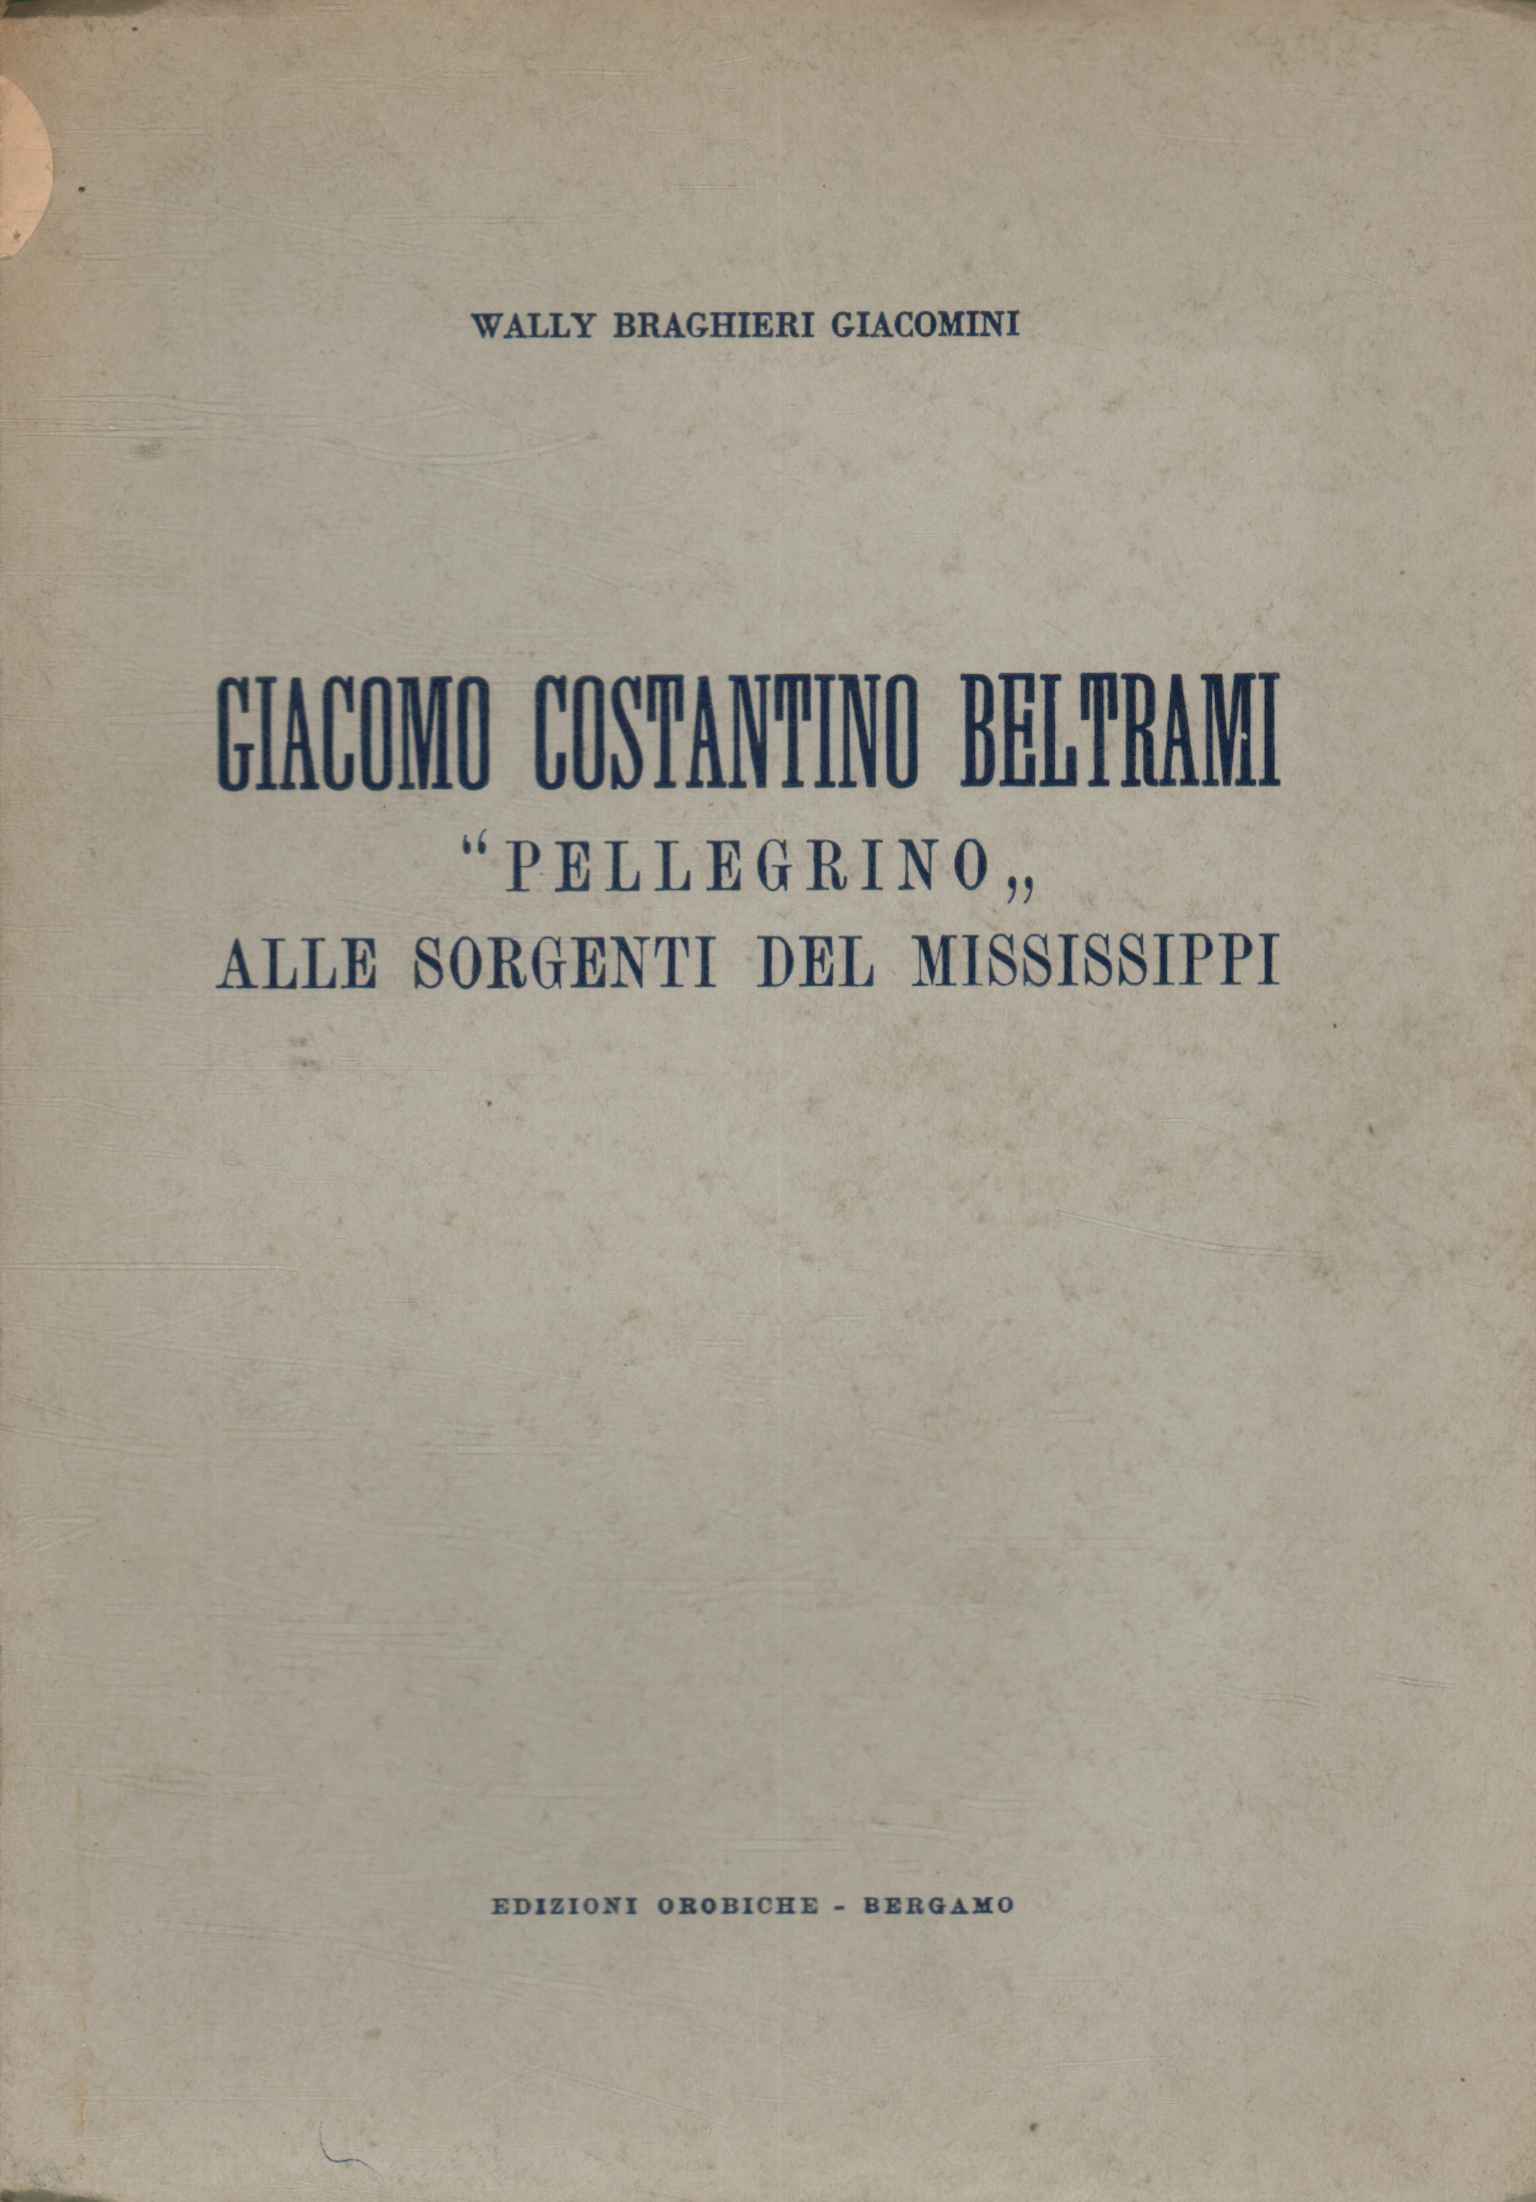 Giacomo Costantino Beltrami pellegrino all